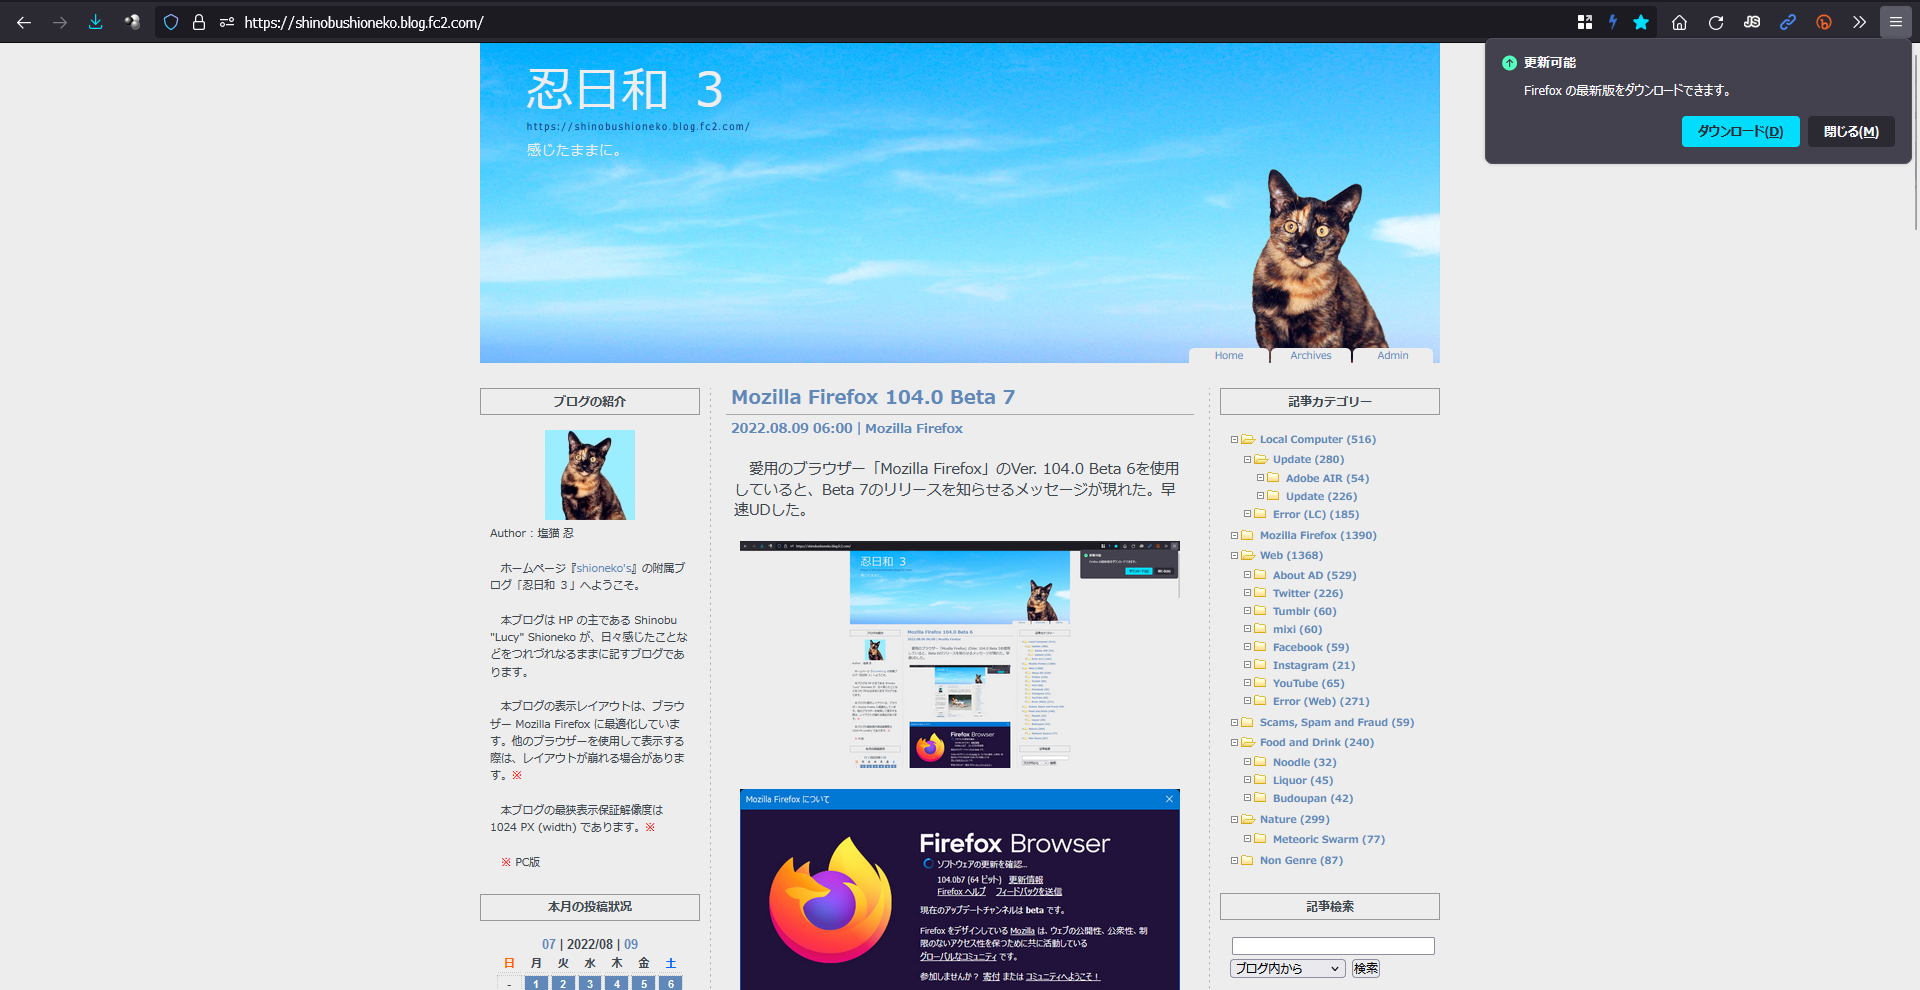 Mozilla Firefox 104.0 Beta 8